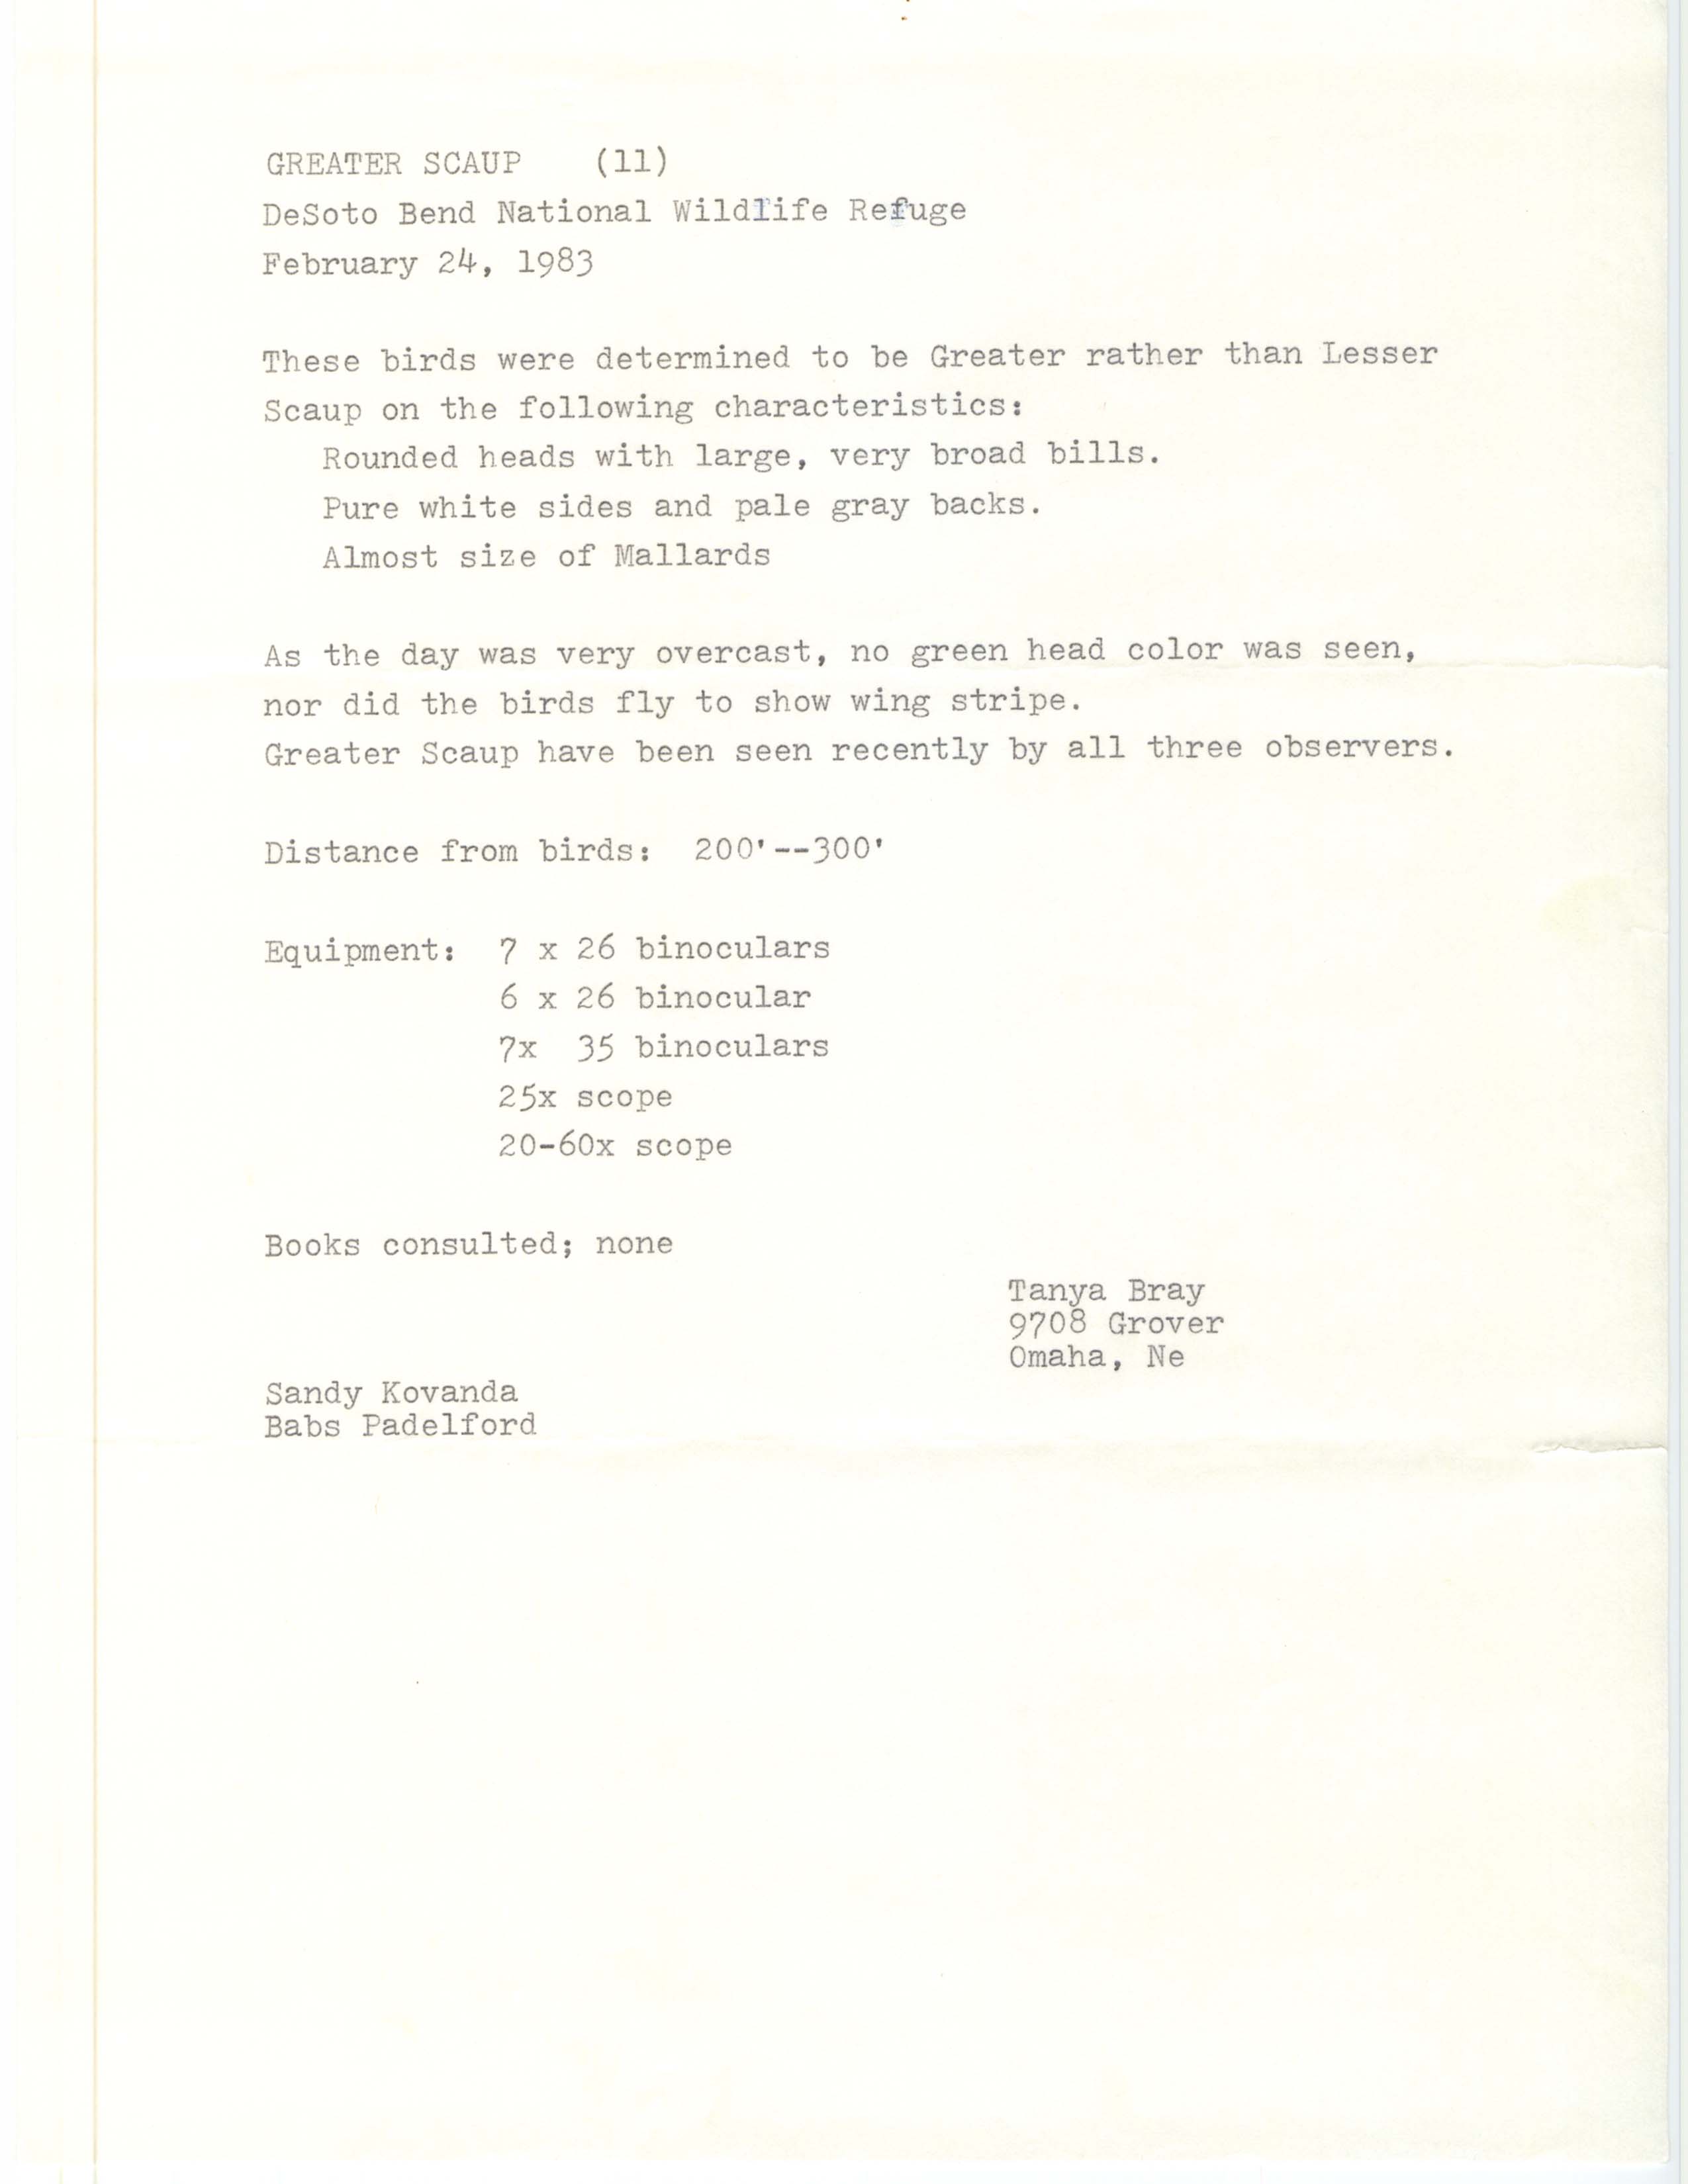 Rare bird documentation form for Greater Scaup at DeSoto National Wildlife Refuge, 1983